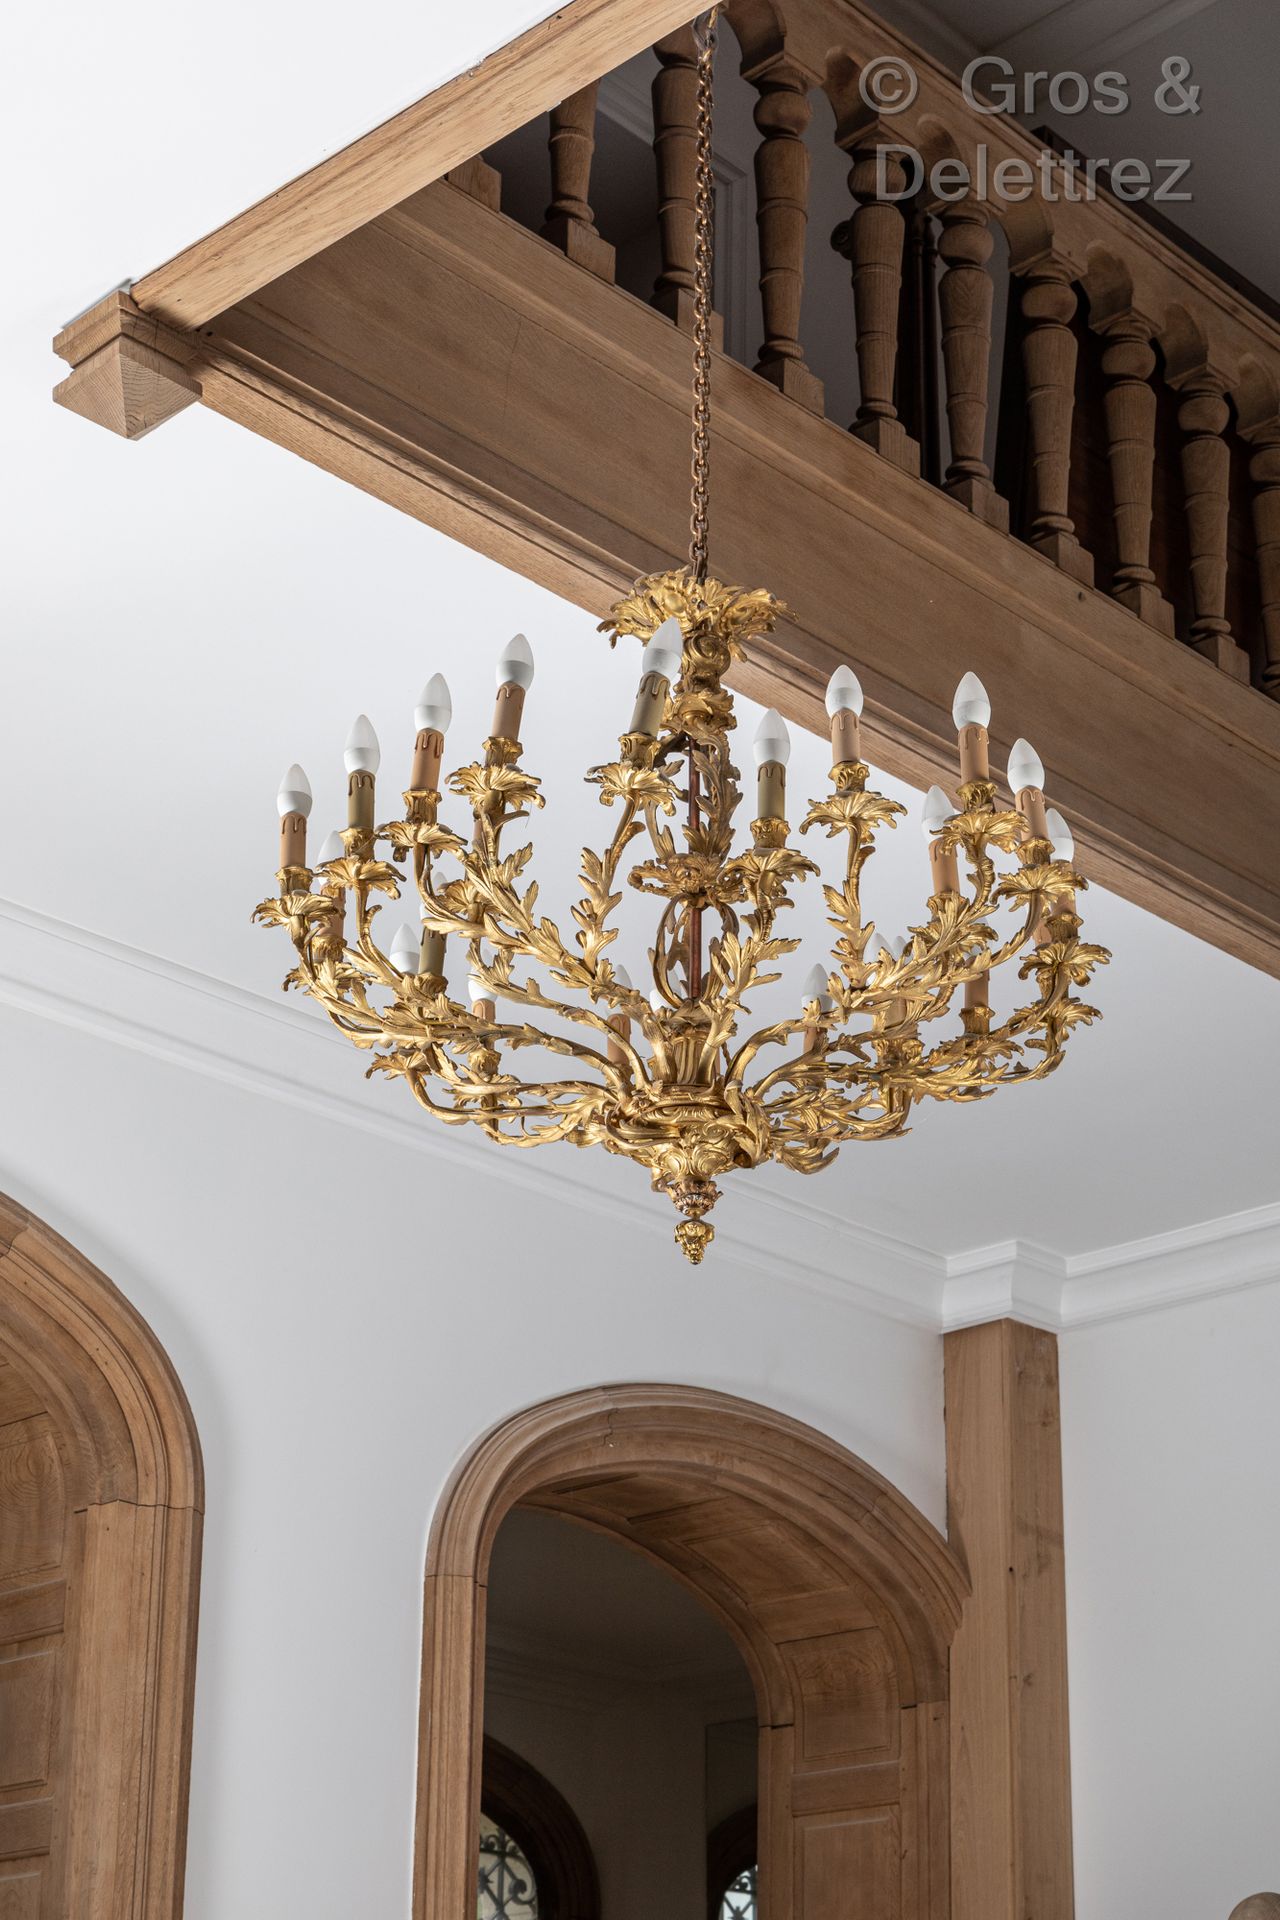 Null 鎏金青铜吊灯，有24个灯臂和丰富的叶子装饰。

高度：80厘米